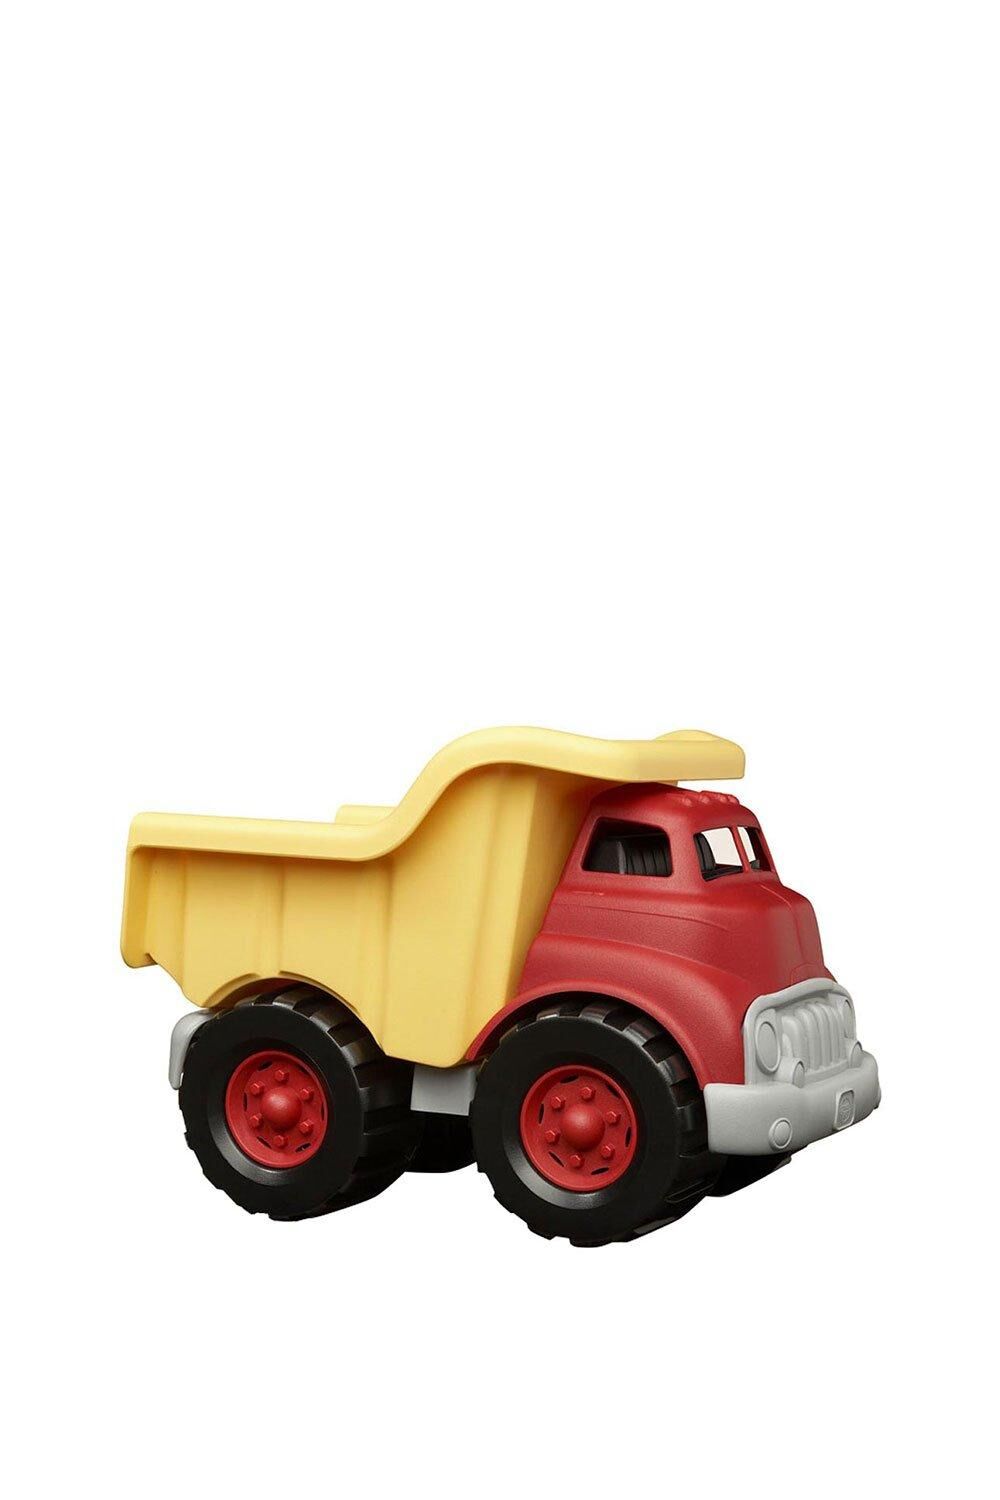 Green Toys Dumper Truck Toy